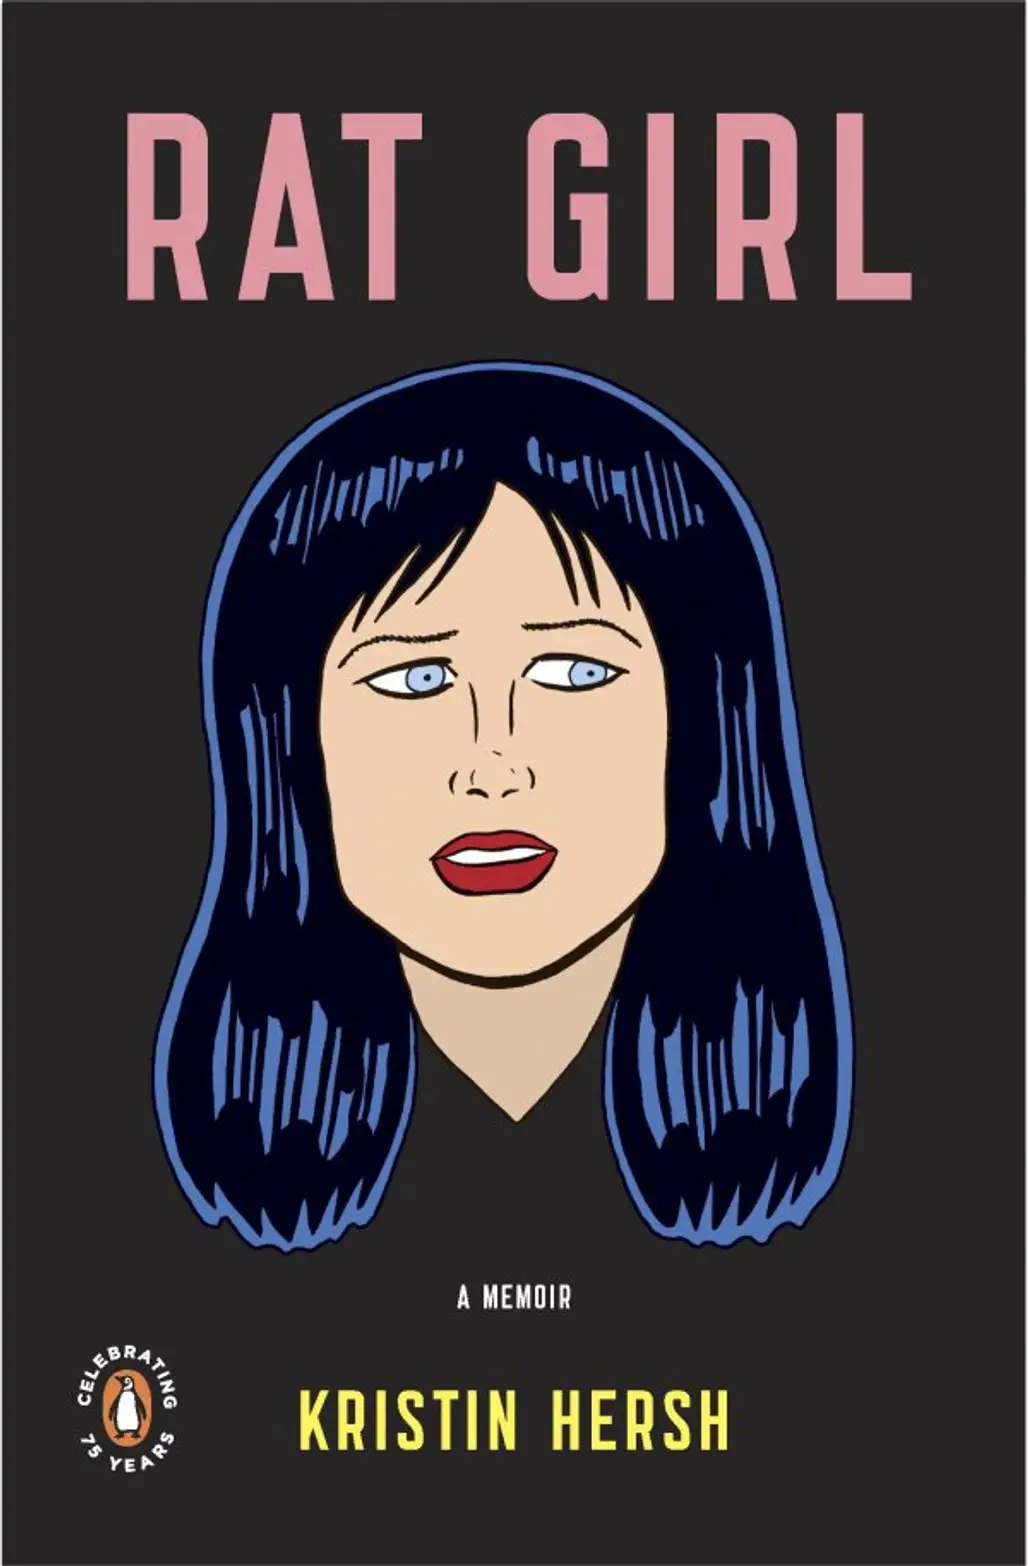 Rat Girl by Kristin Hersh